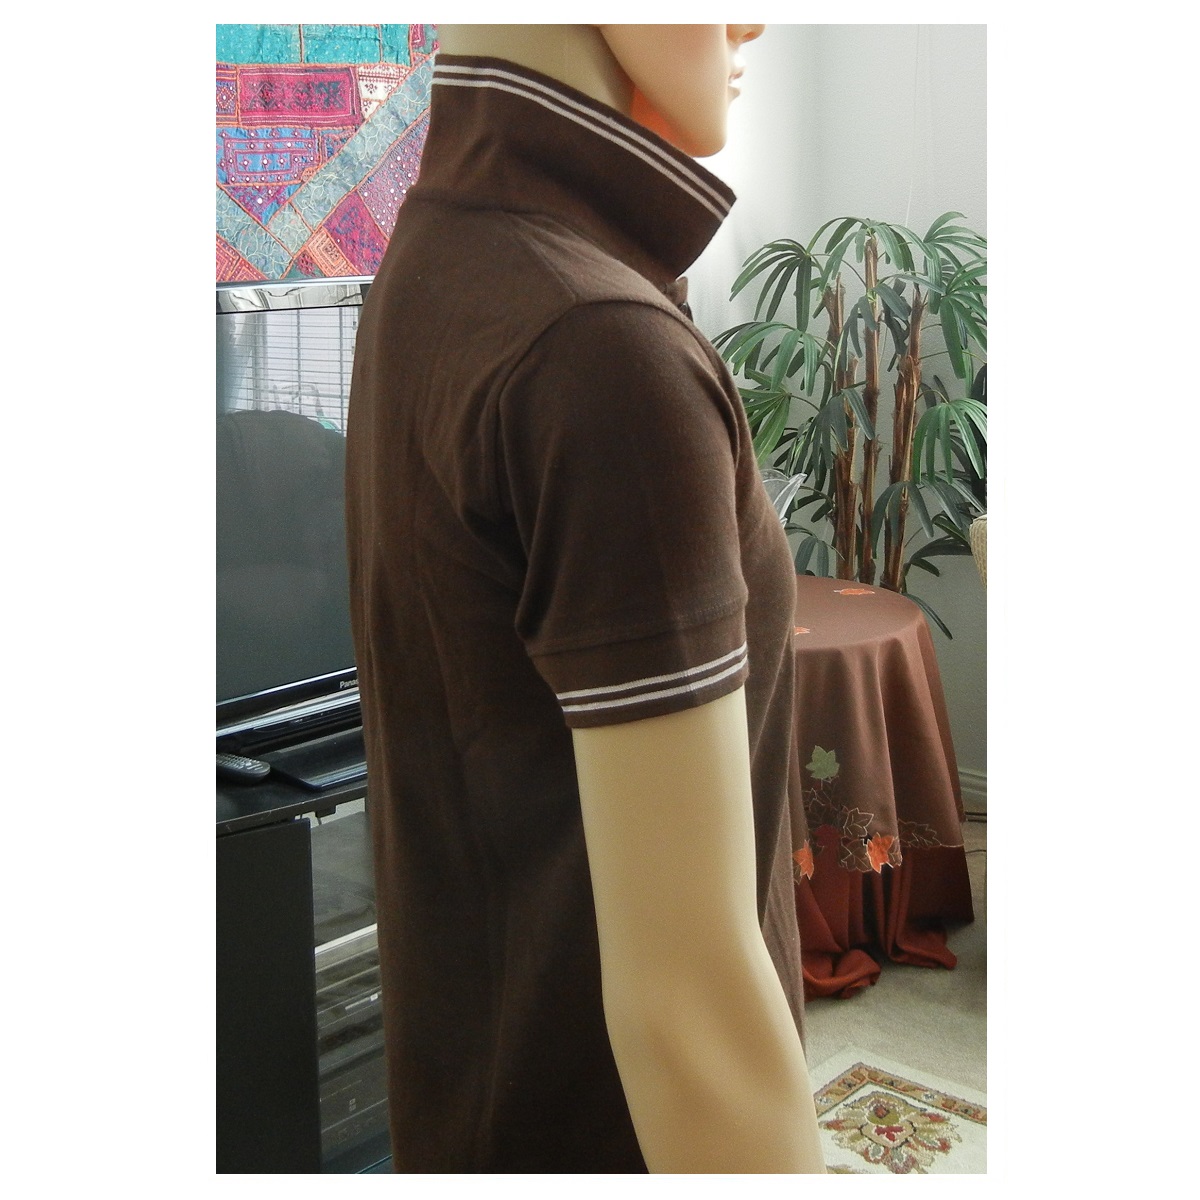 Men's Polo Shirt Golf Shirt Short Sleeve Cotton Shirt with Collar